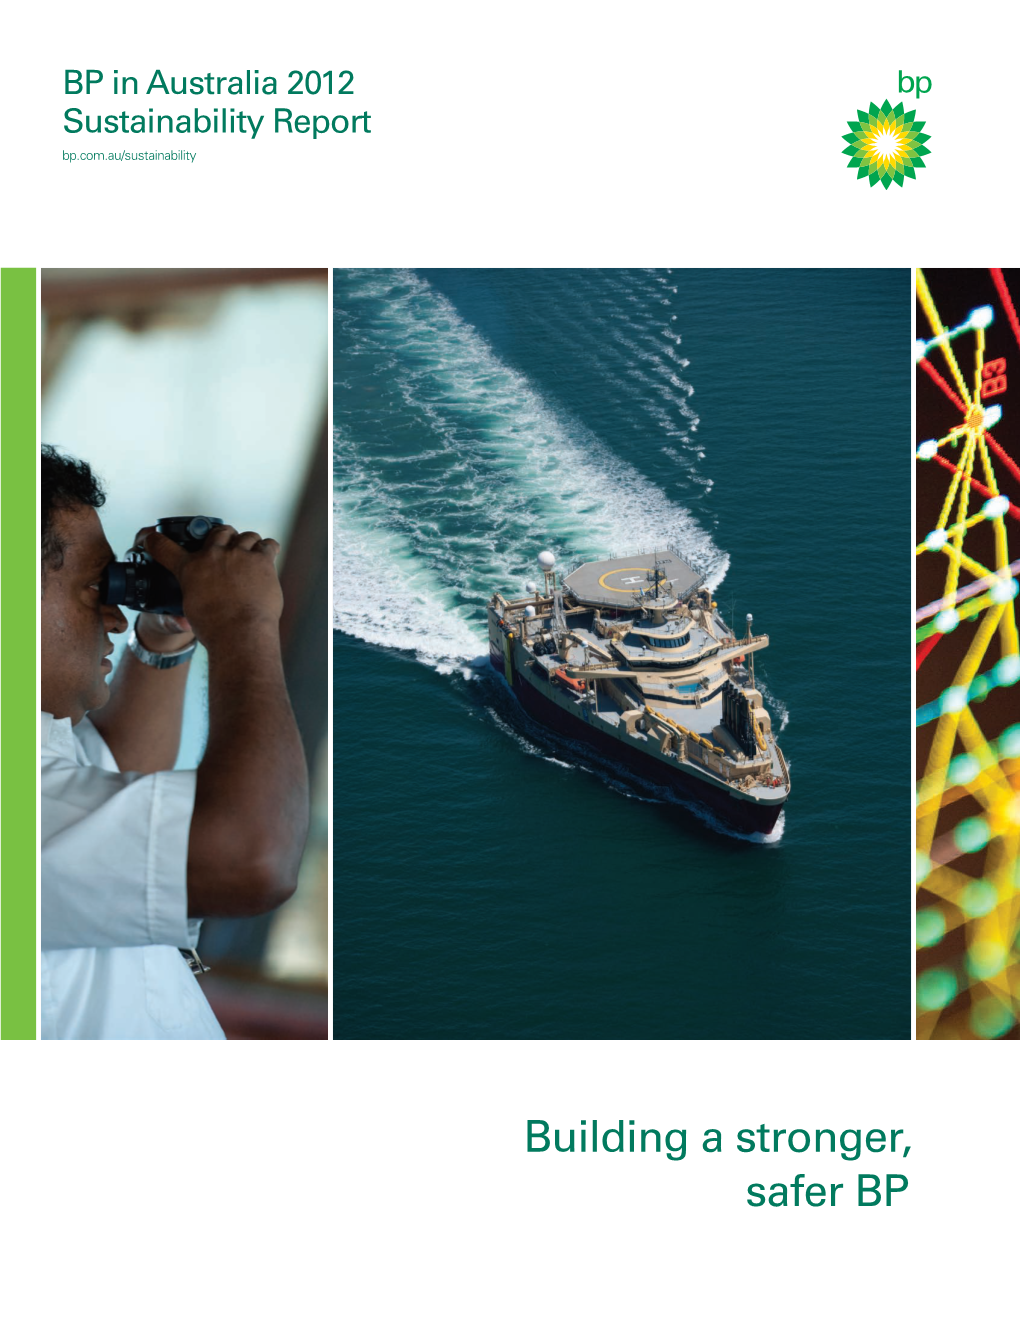 BP Australia's Sustainability Report 2012